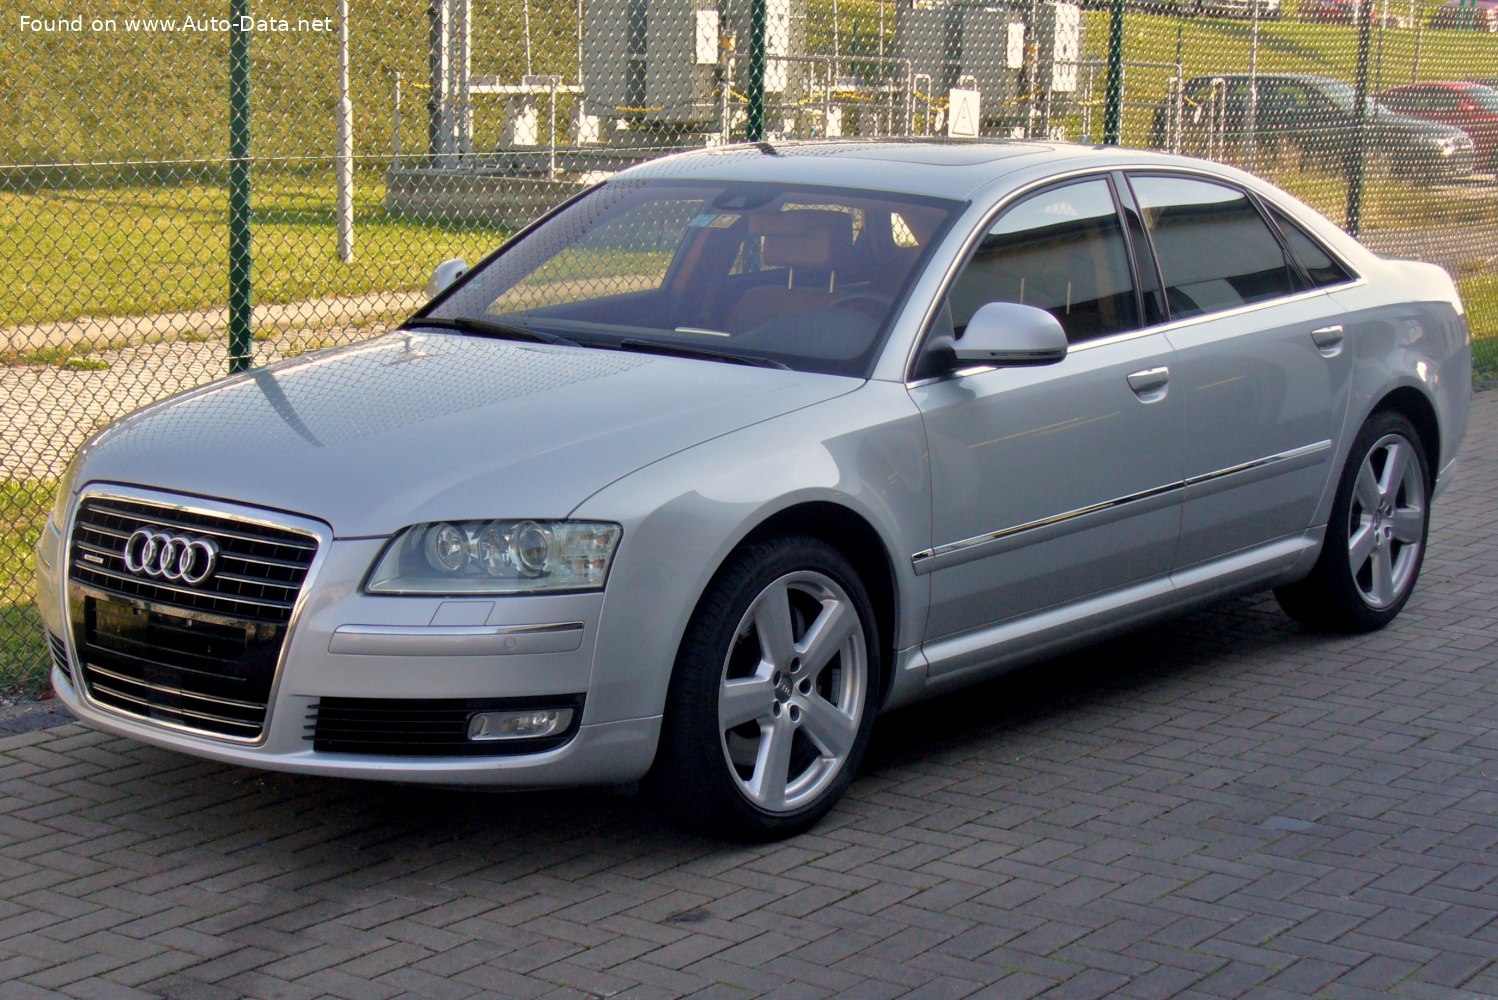 2007 Audi A8 (D3, 4E, facelift 2007) 4.2 FSI V8 (350 Hp) quattro Tiptronic  | Technical specs, data, fuel consumption, Dimensions